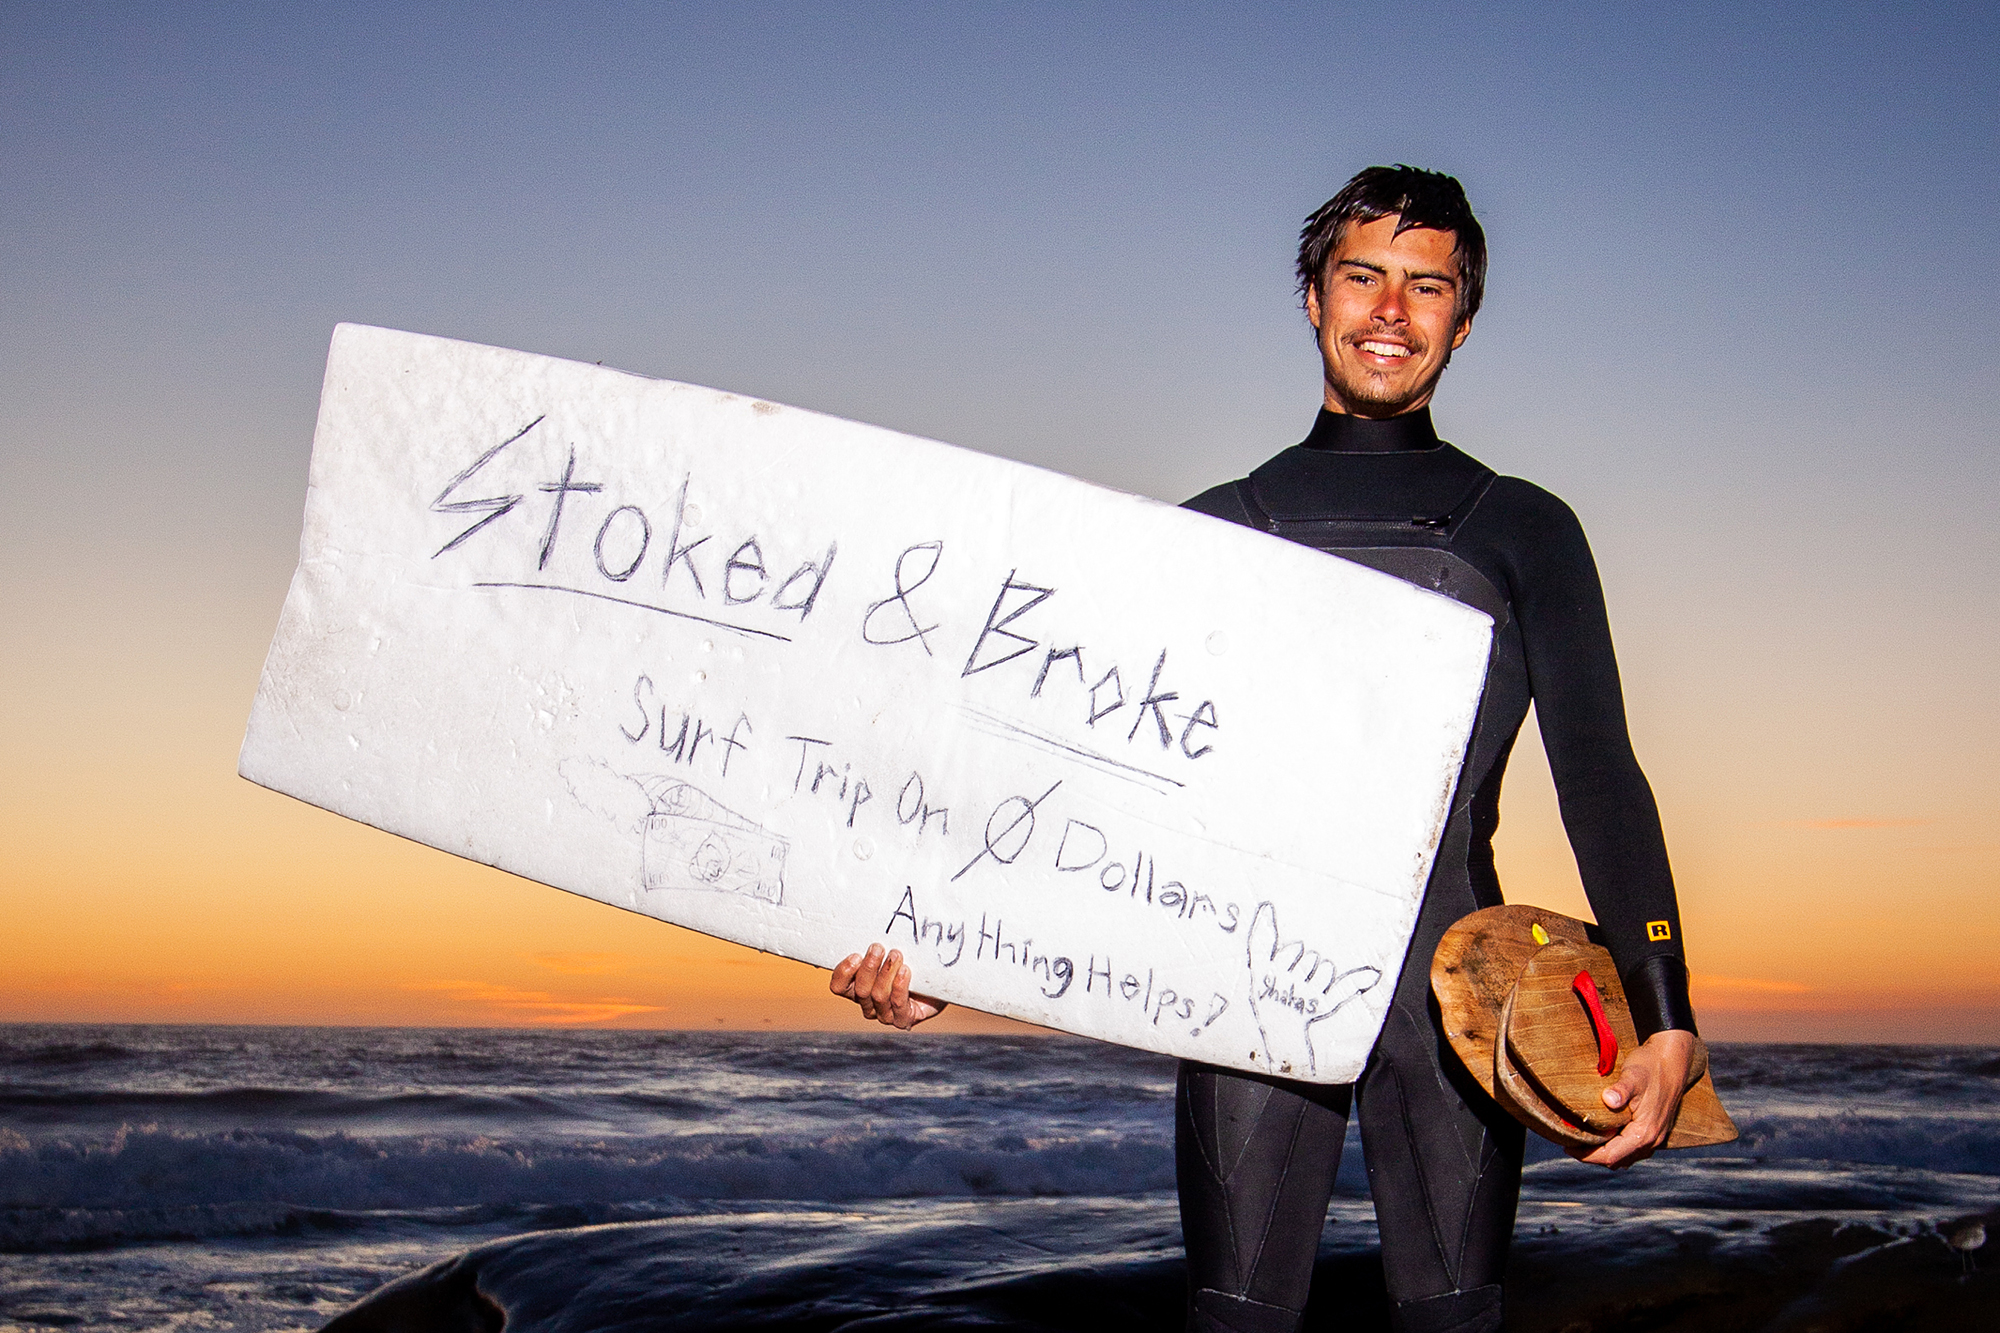 Coming This Weekend: “Stoked & Broke” – Surfline.com Surf News